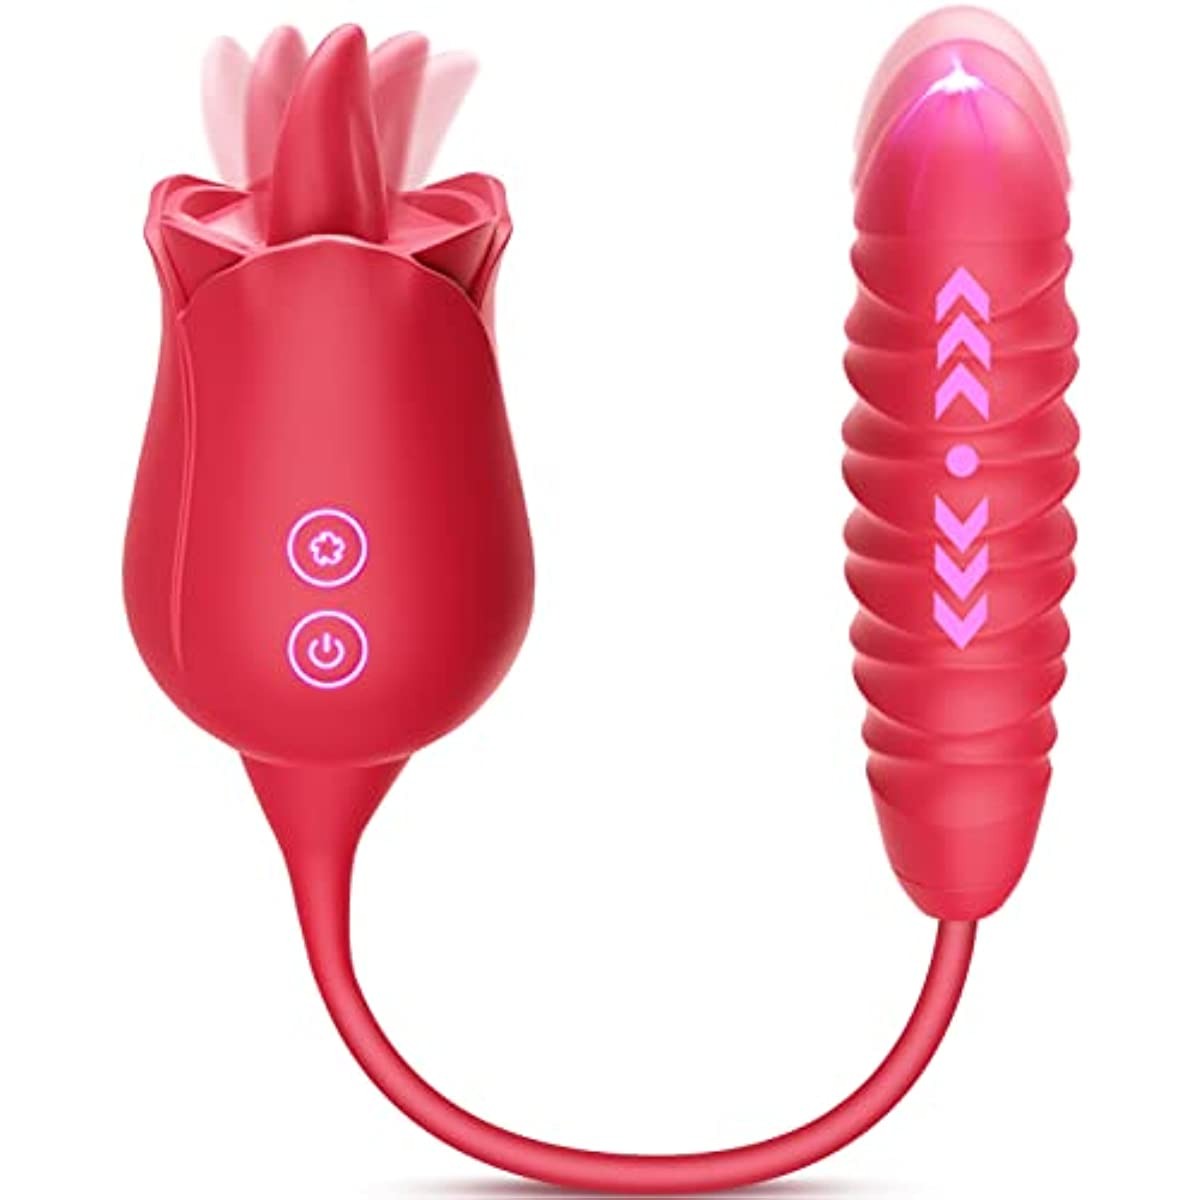 Orgasm in 30 Seconds Multiple Stimulation Rose Vibrator